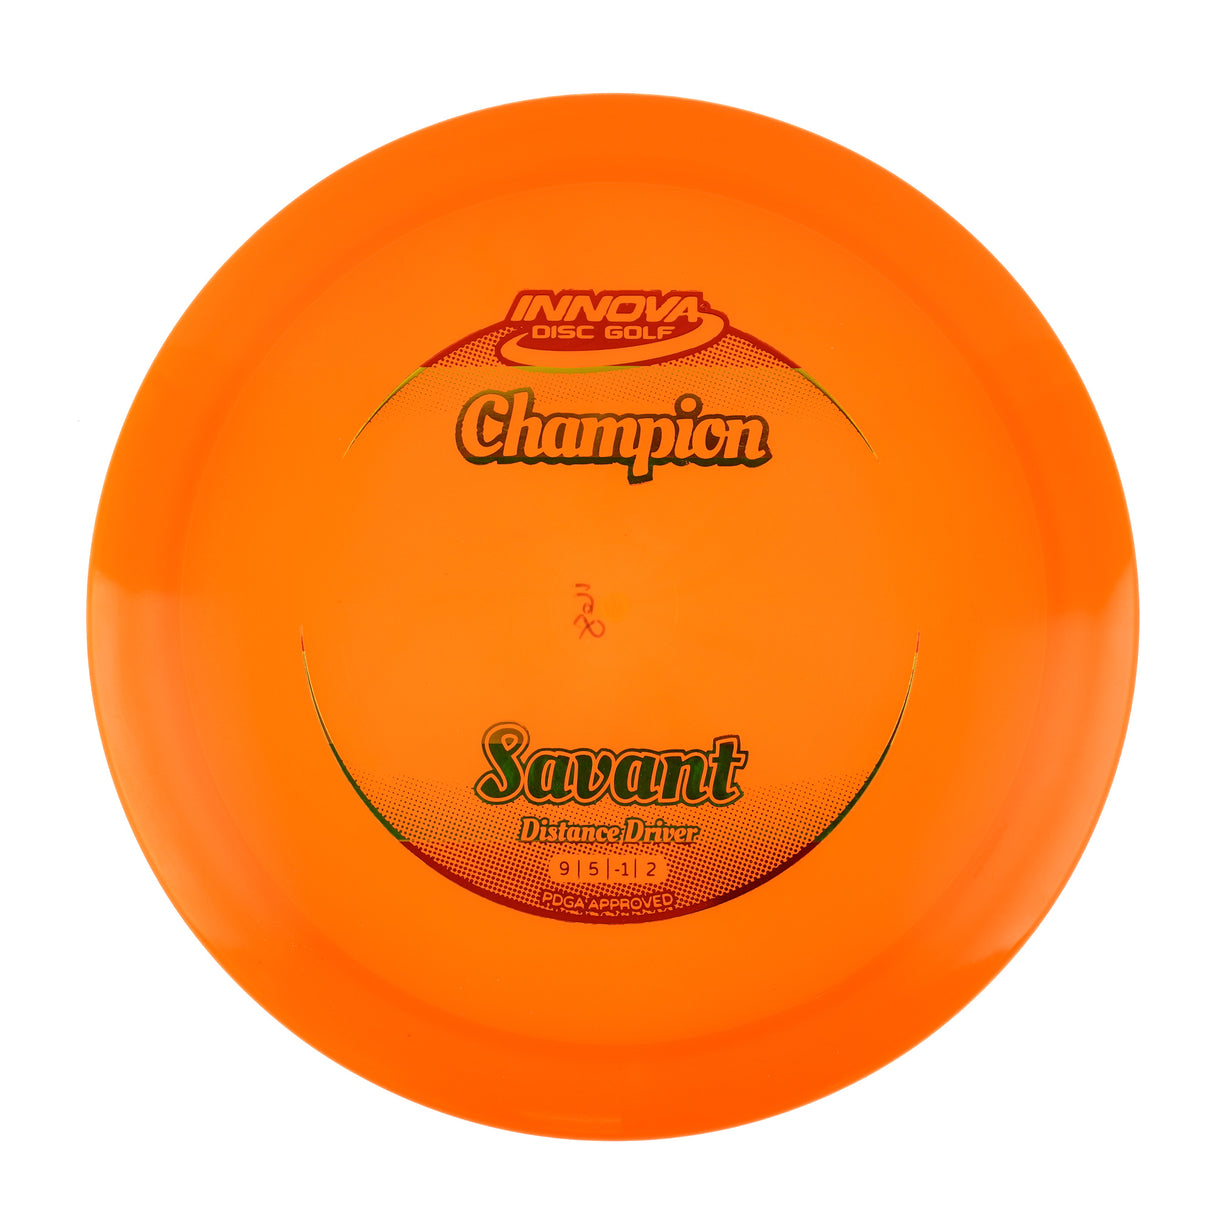 Innova Savant - Champion 170g | Style 0002